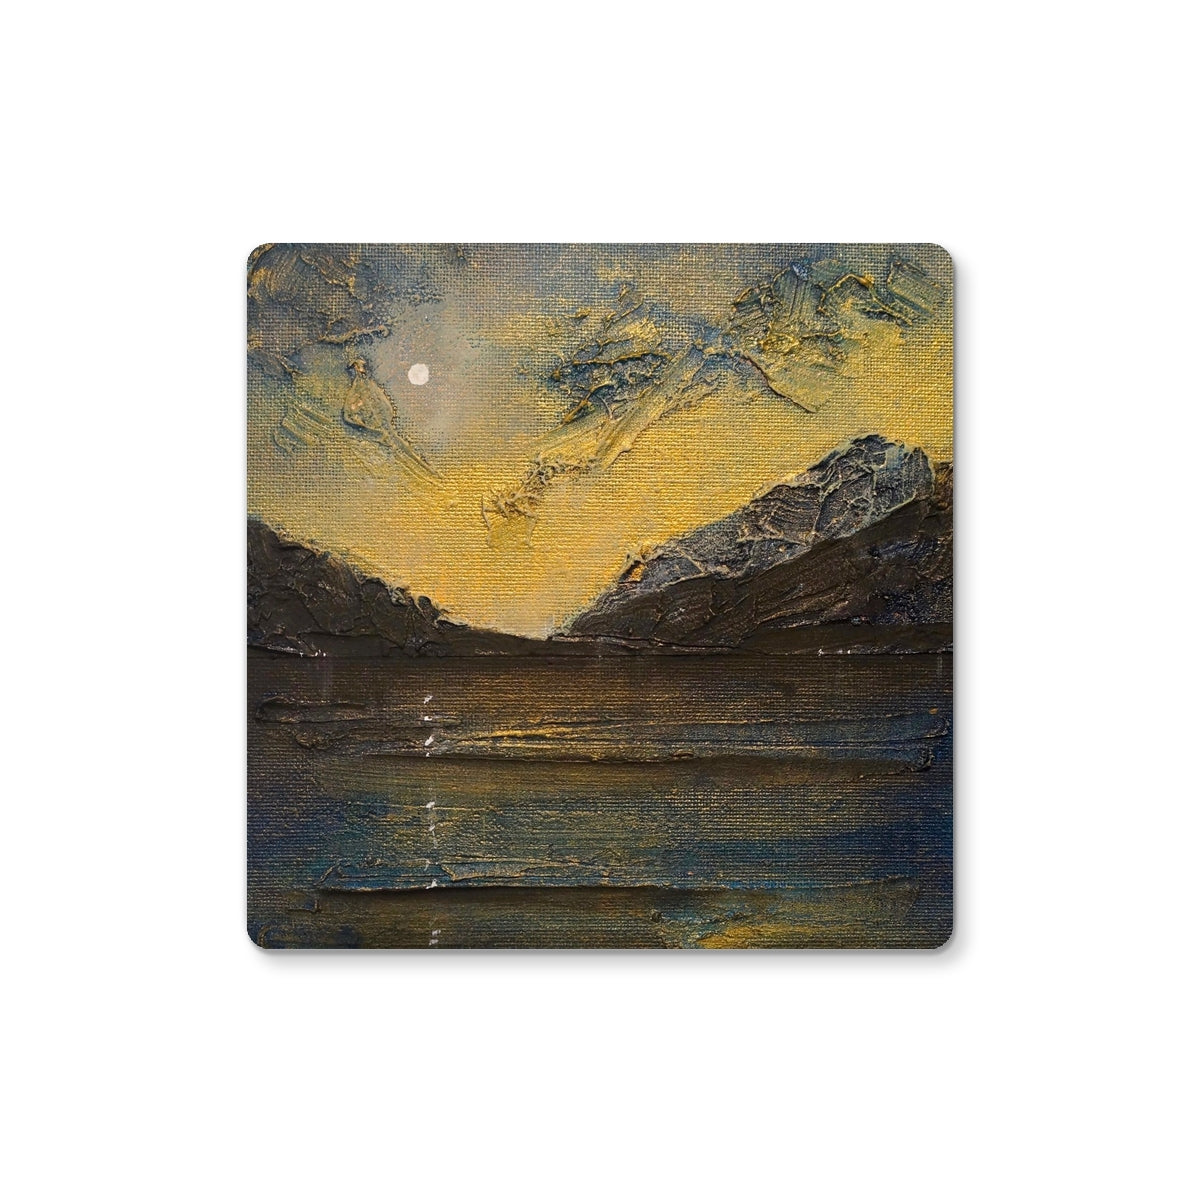 Loch Lomond Moonlight Art Gifts Coaster-Homeware-Scottish Lochs & Mountains Art Gallery-Single Coaster-Paintings, Prints, Homeware, Art Gifts From Scotland By Scottish Artist Kevin Hunter